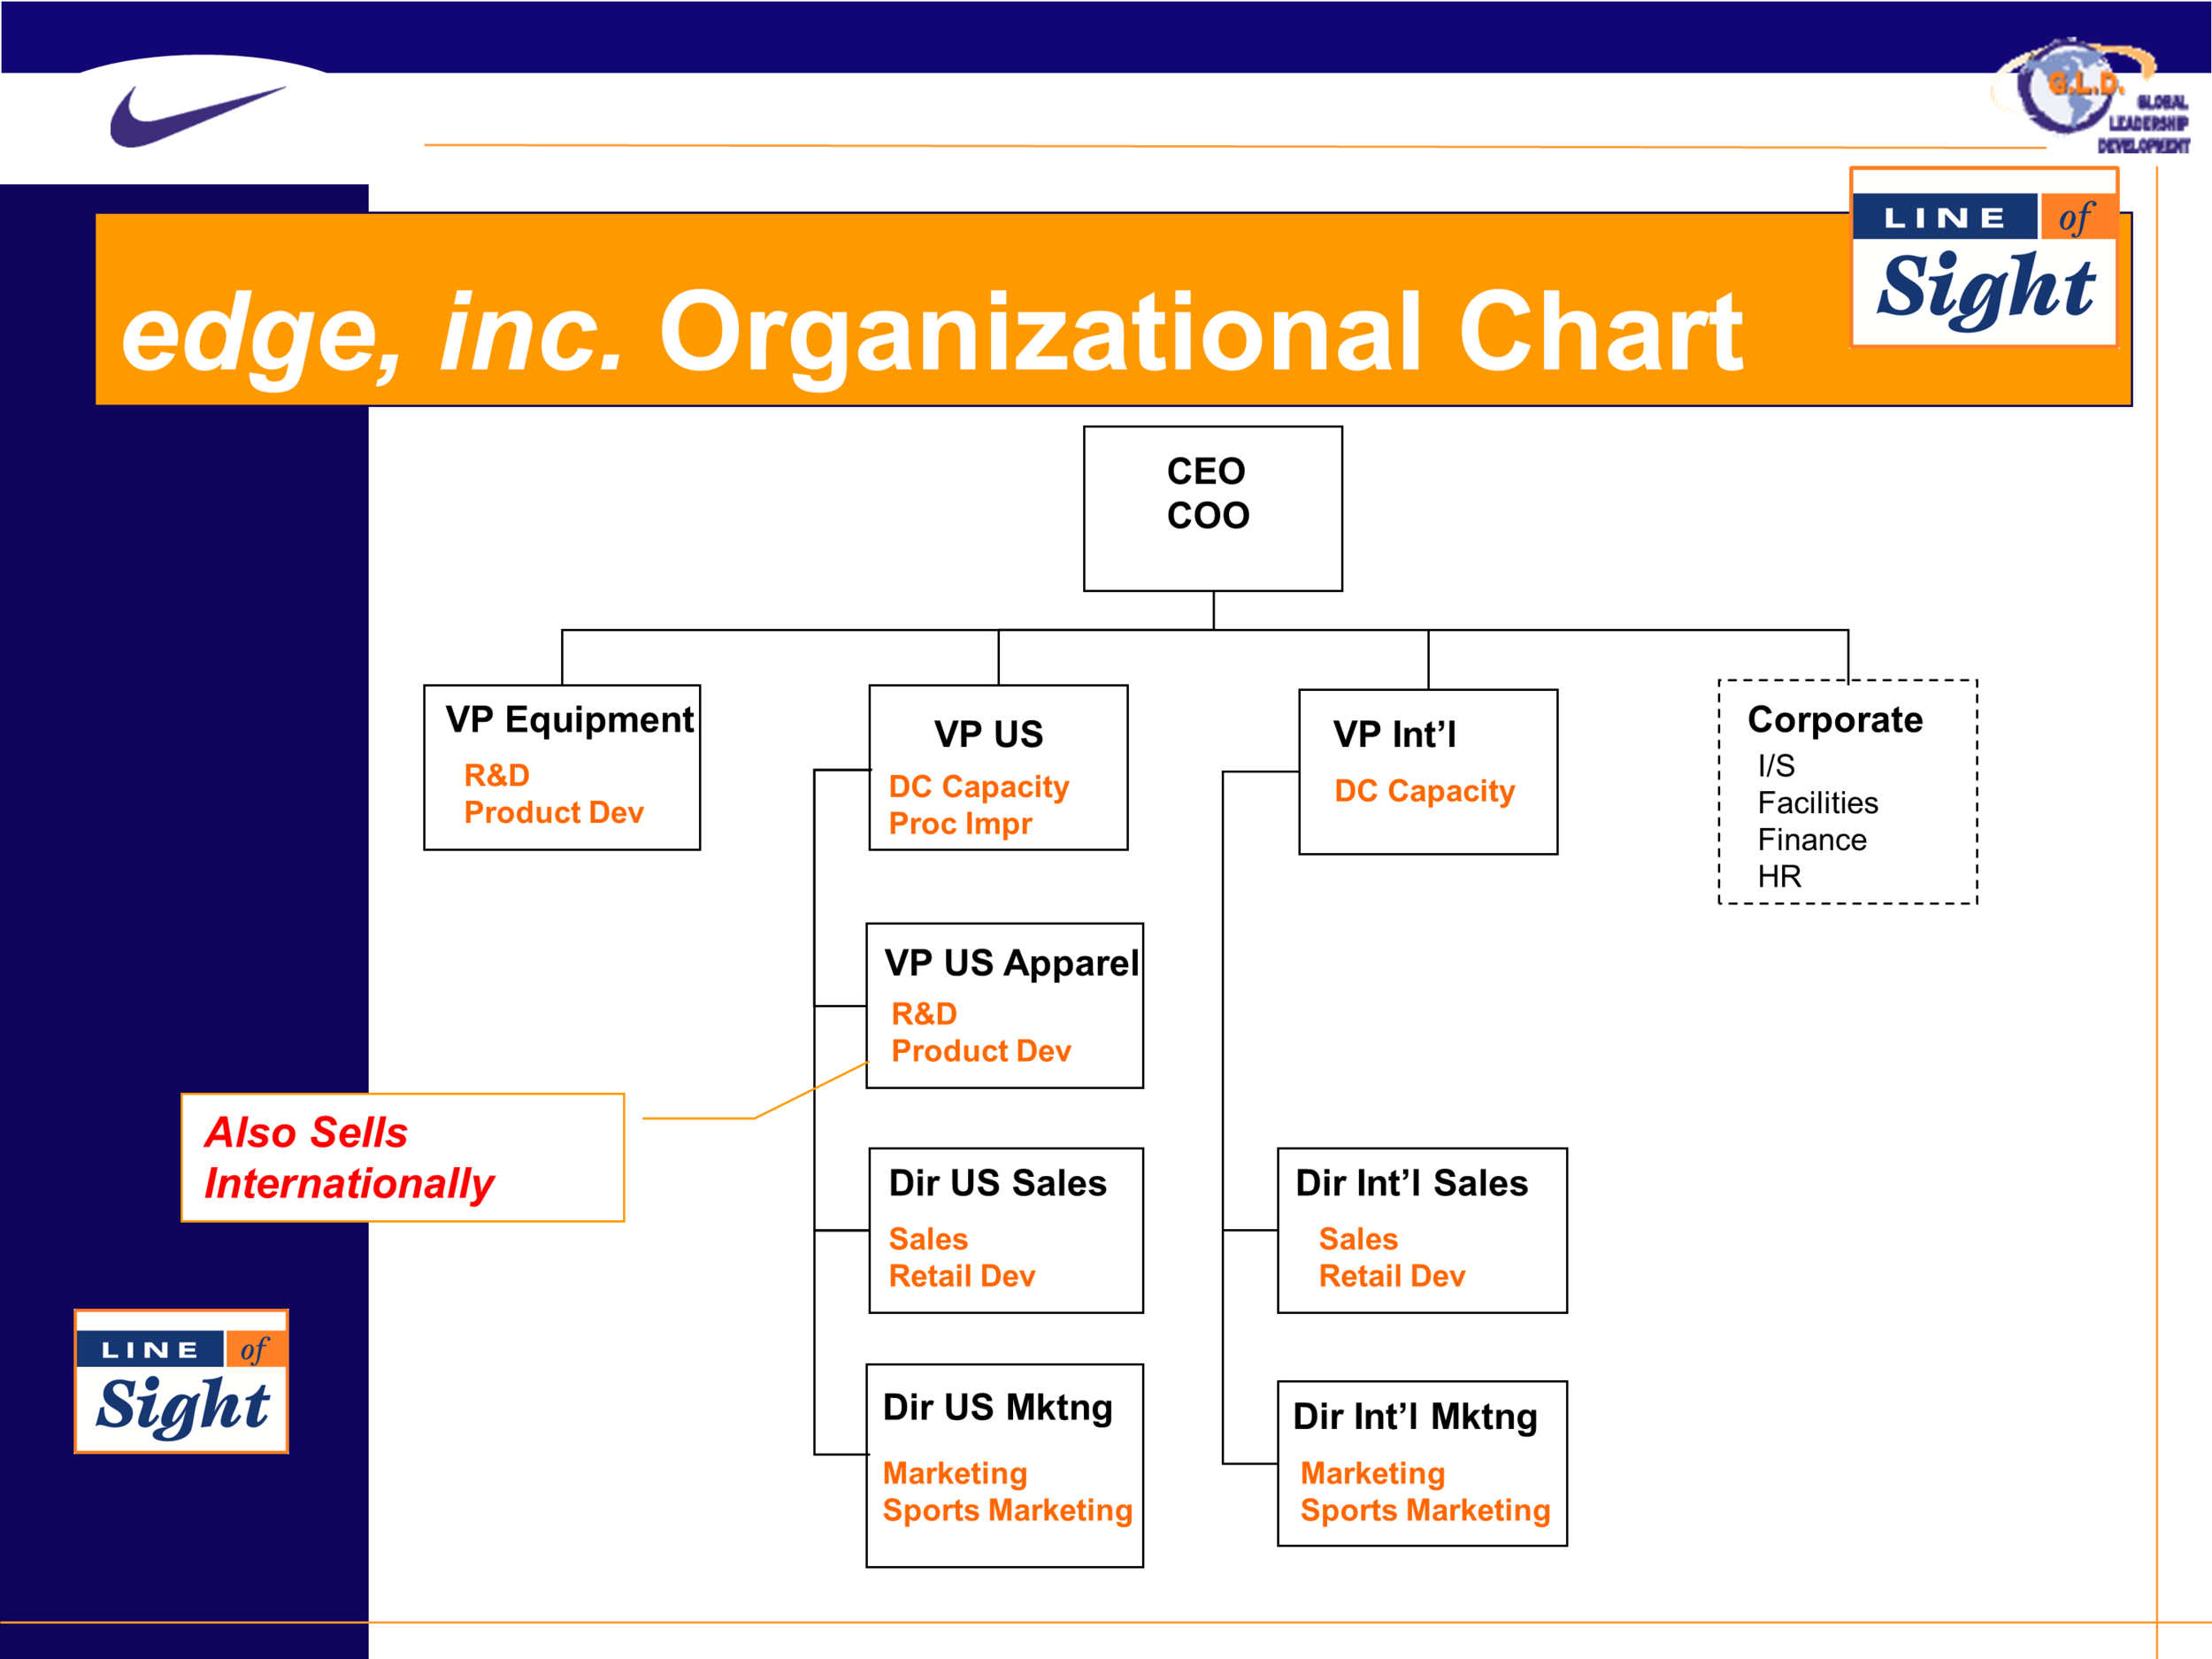 nike organizational structure 2018